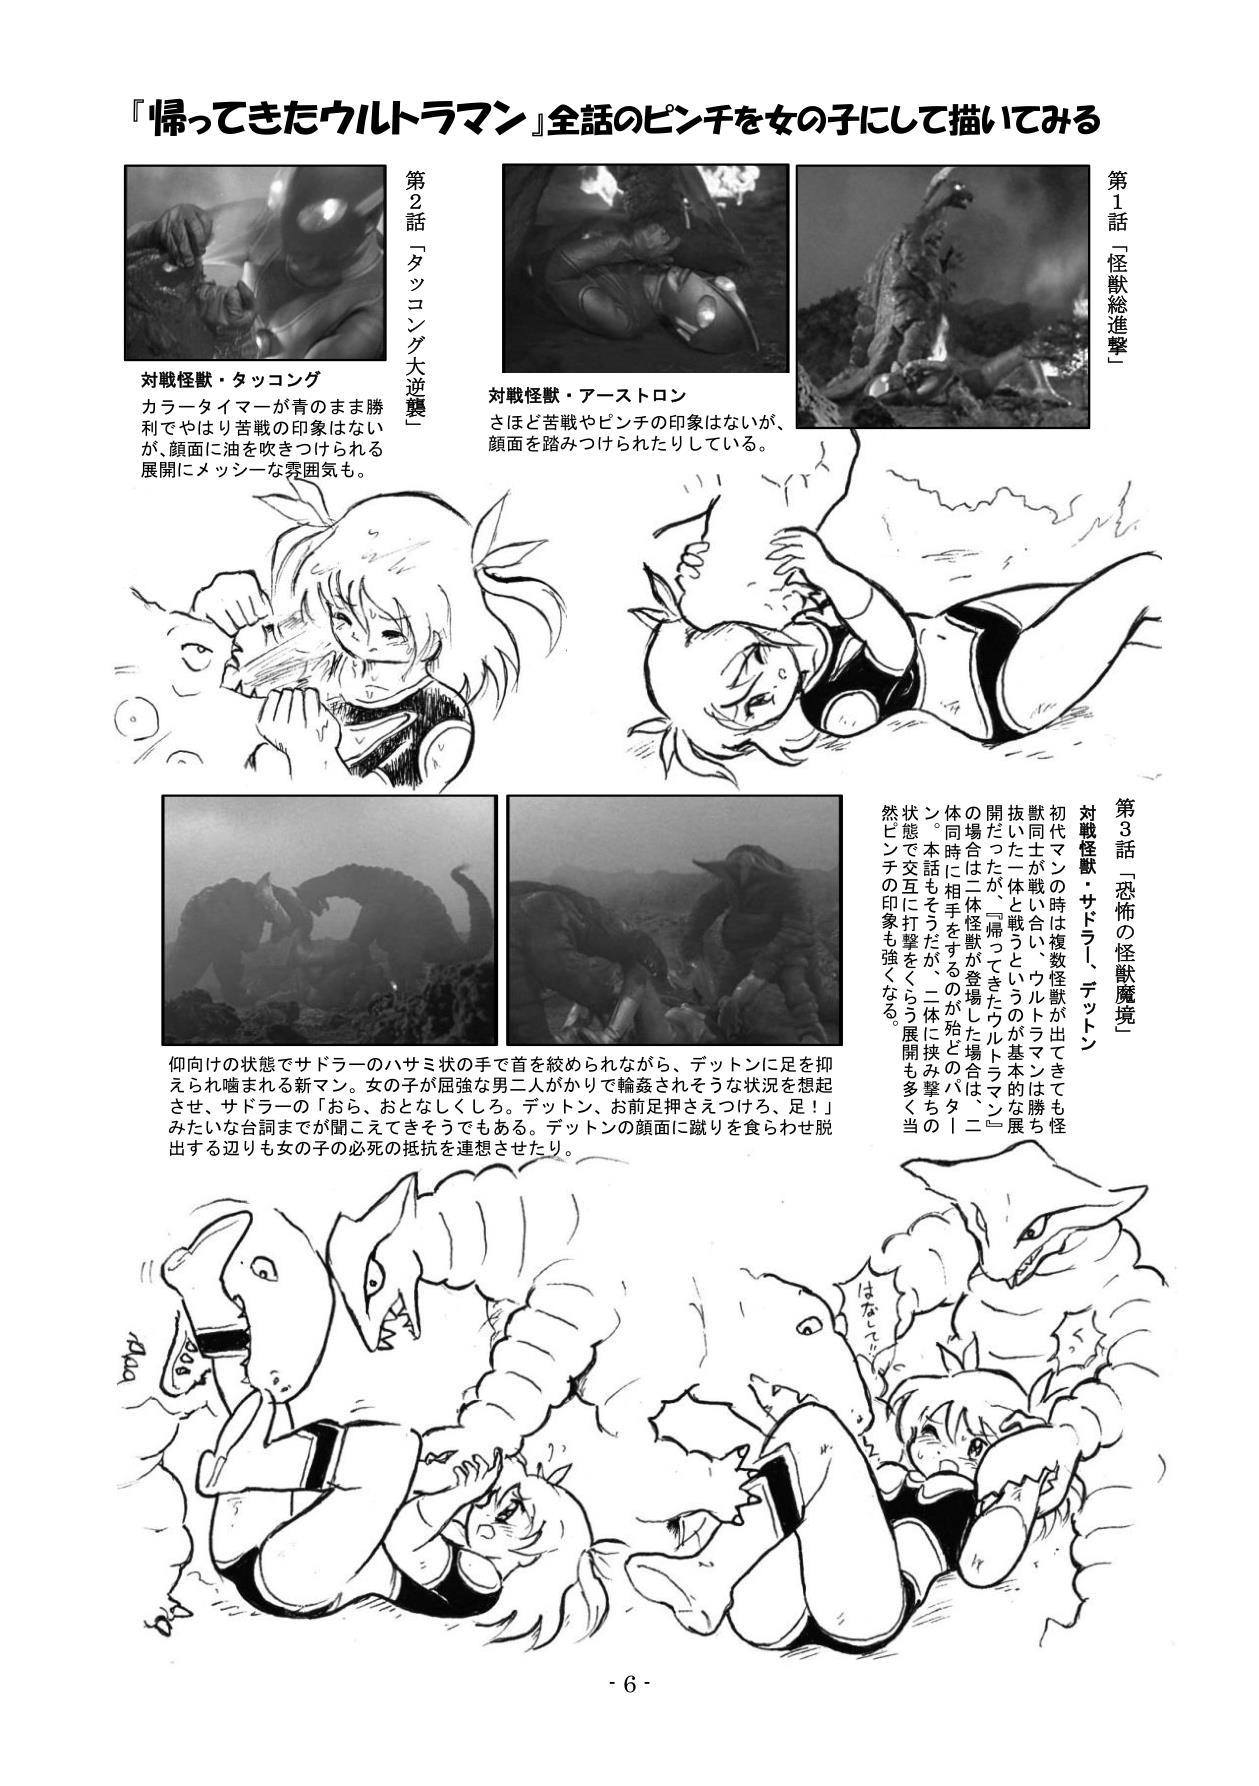 Trio Kaettekita Ultraman Musume Dai Pinch - Ultraman Ffm - Page 5